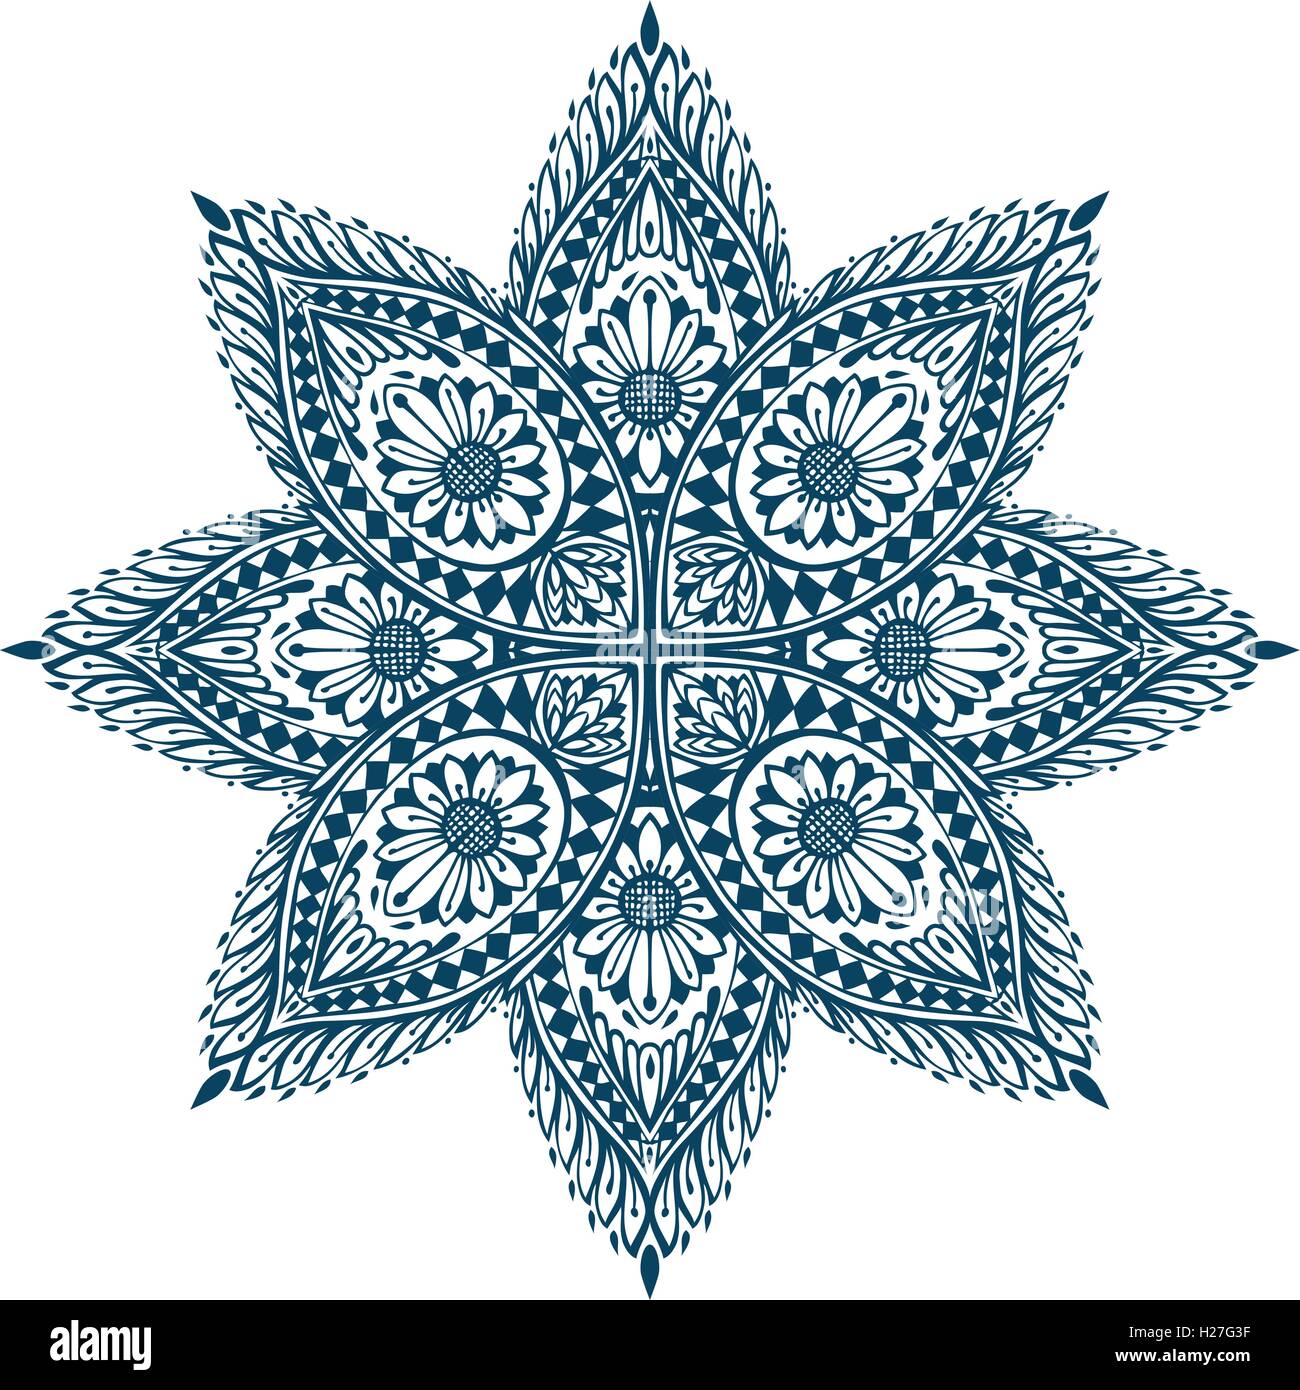 Mandala. Decorative ethnic floral ornament. Vector illustration Stock Vector